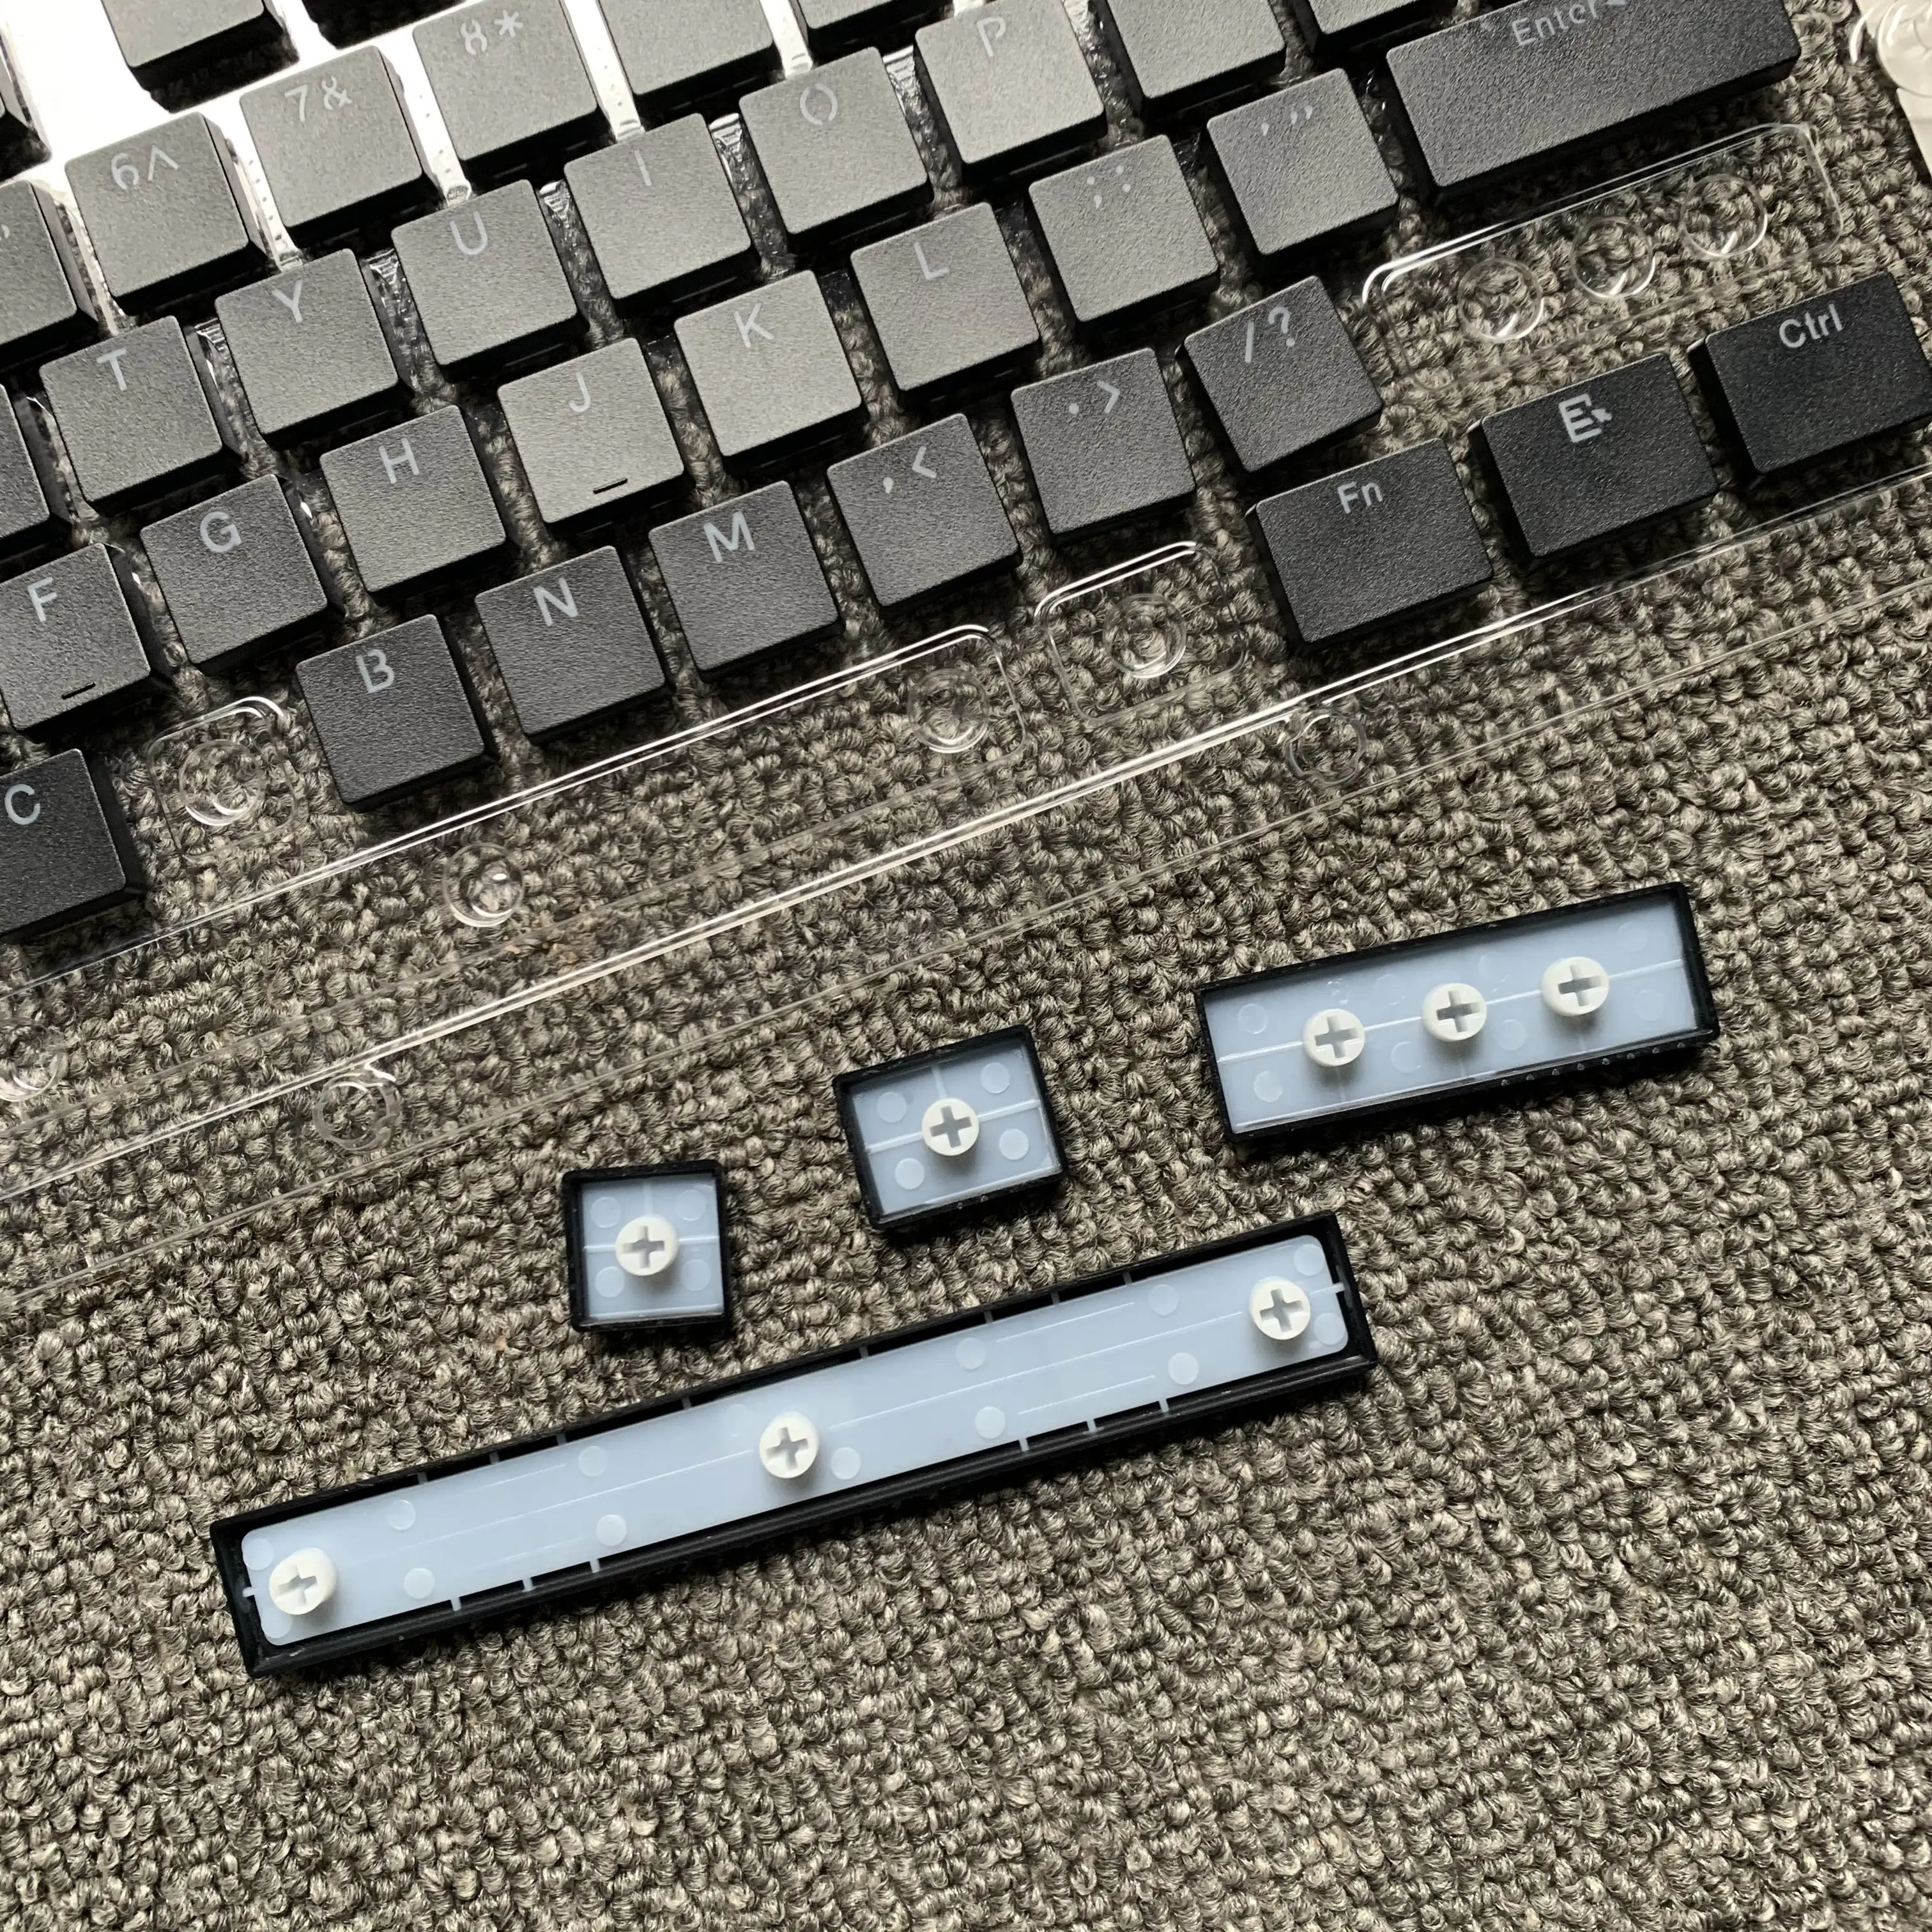 Chocolate Keyboard Style Keycaps,Island-style Keycap Set for Mechanical Keyboard,Chiclet Keyboard,MX stem,Backlit support images - 6